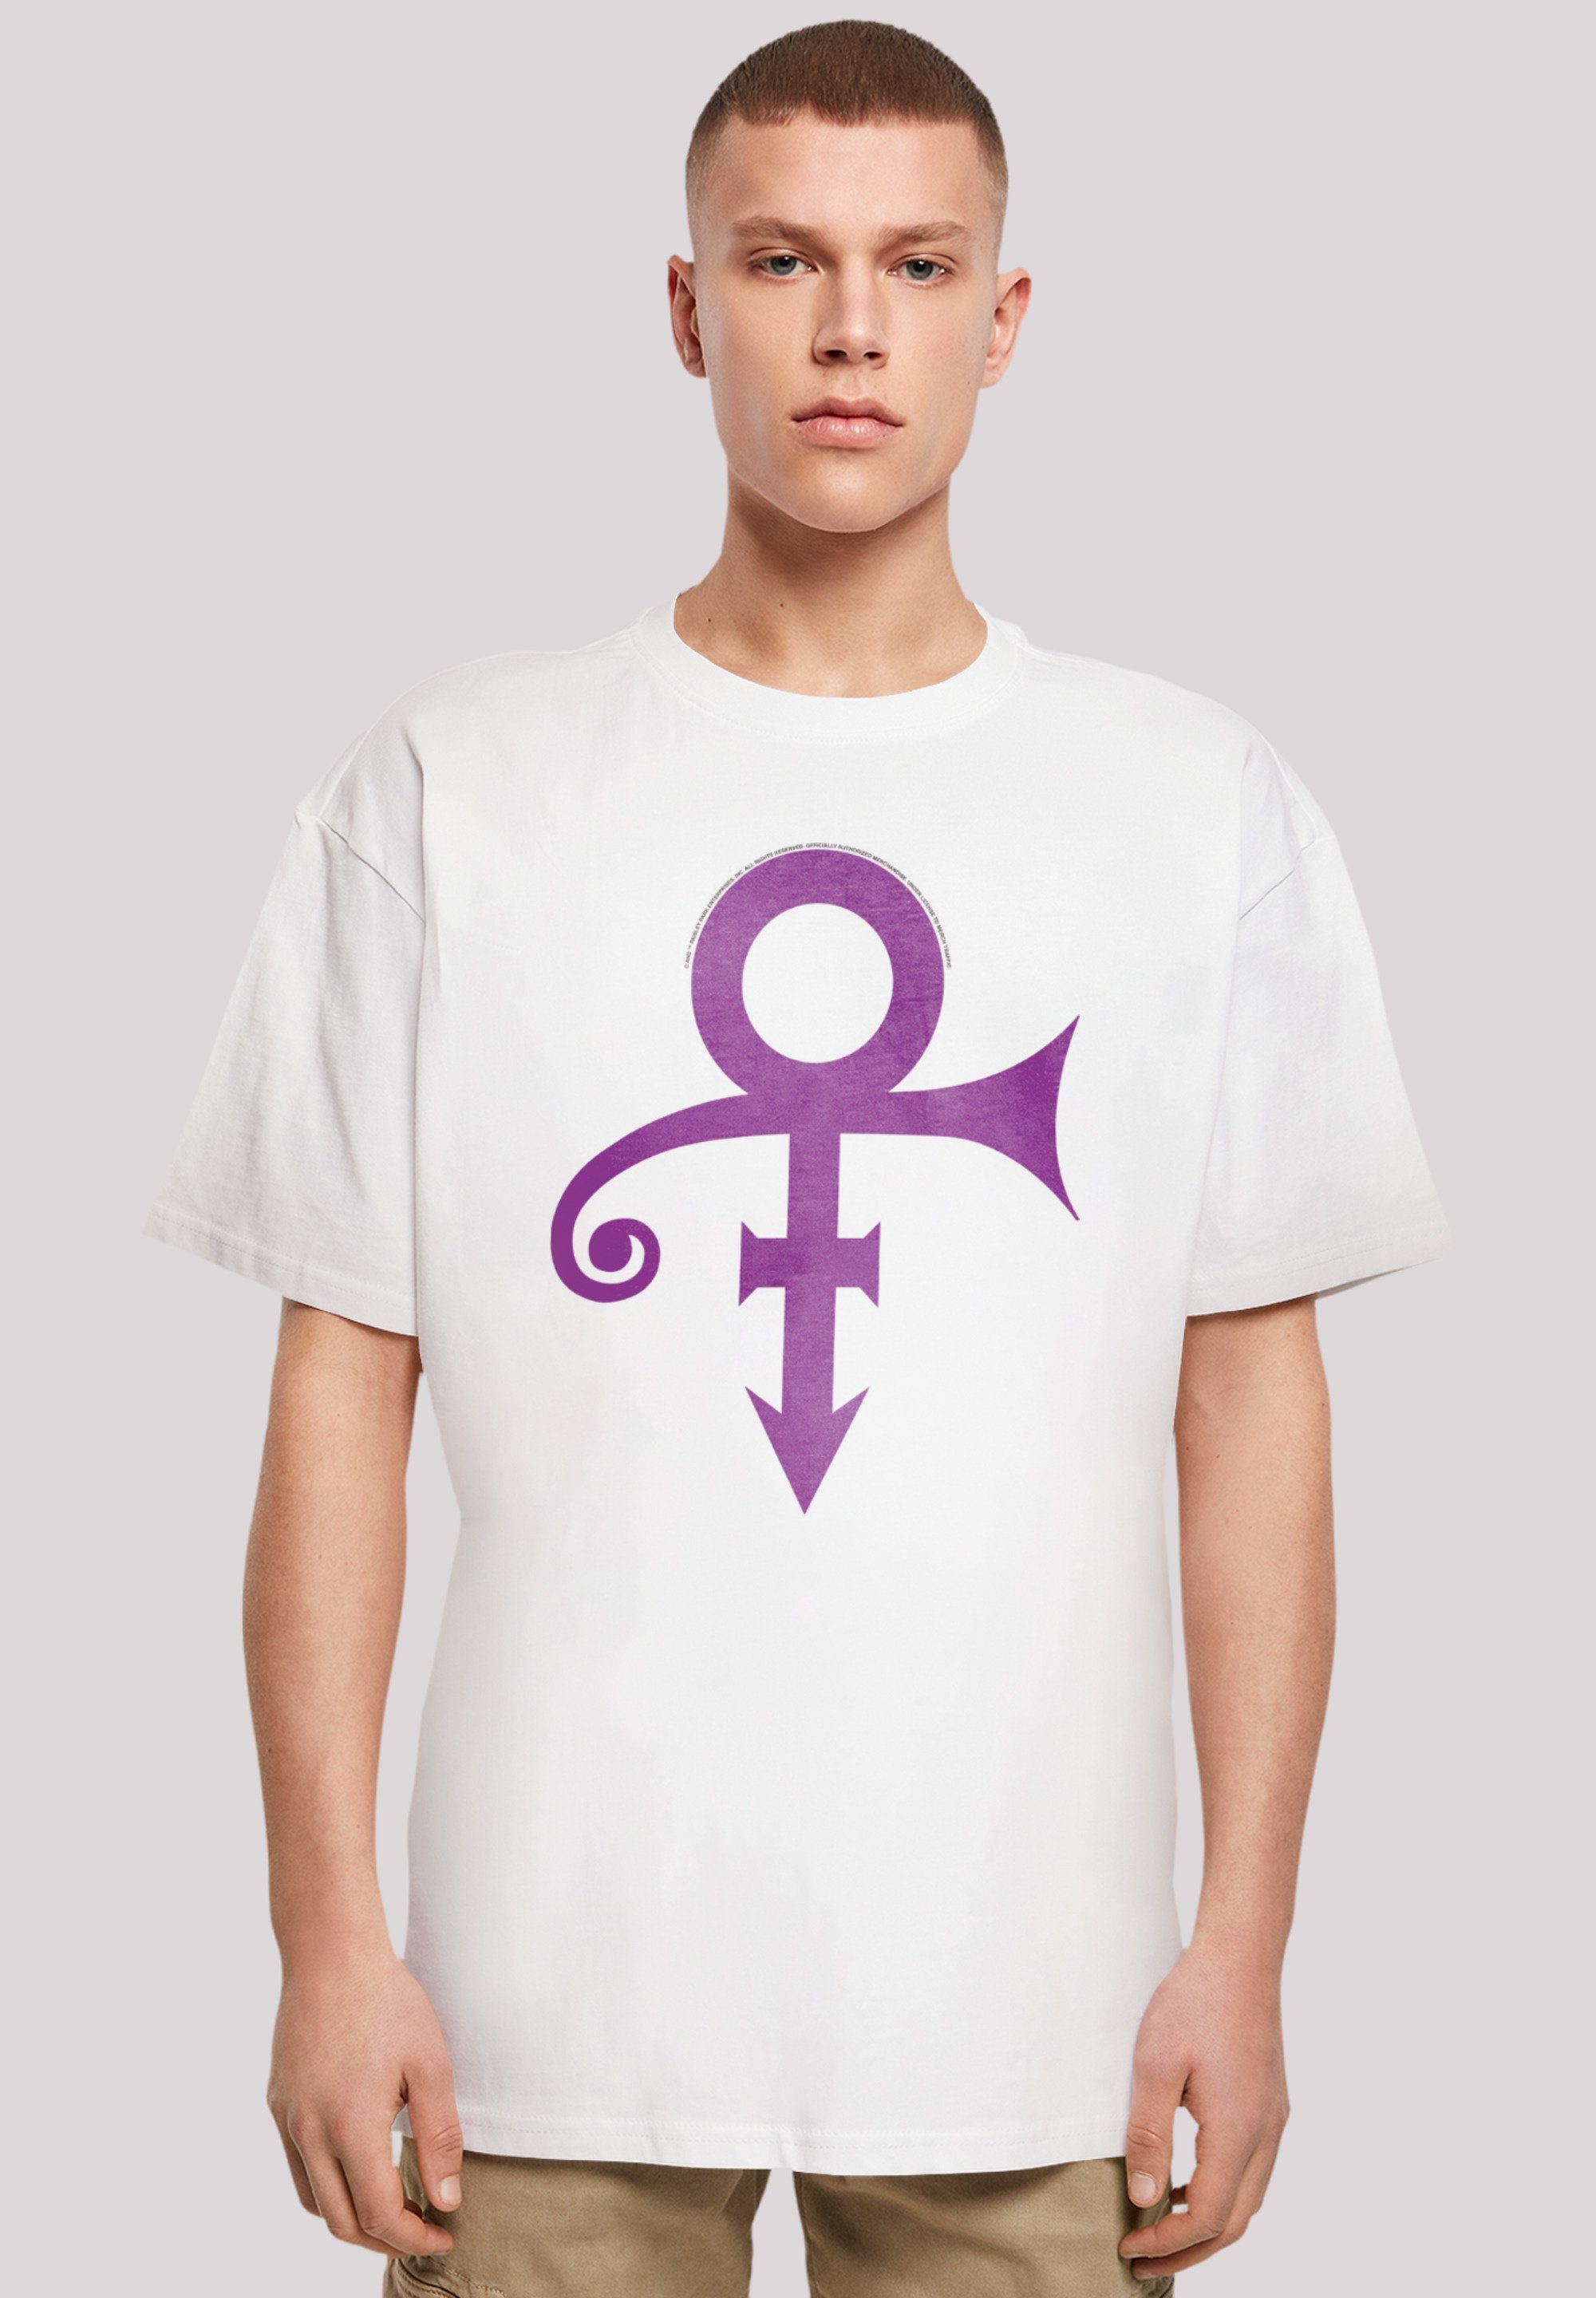 F4NT4STIC T-Shirt Prince Musik Album Logo Premium Qualität, Rock-Musik, Band weiß